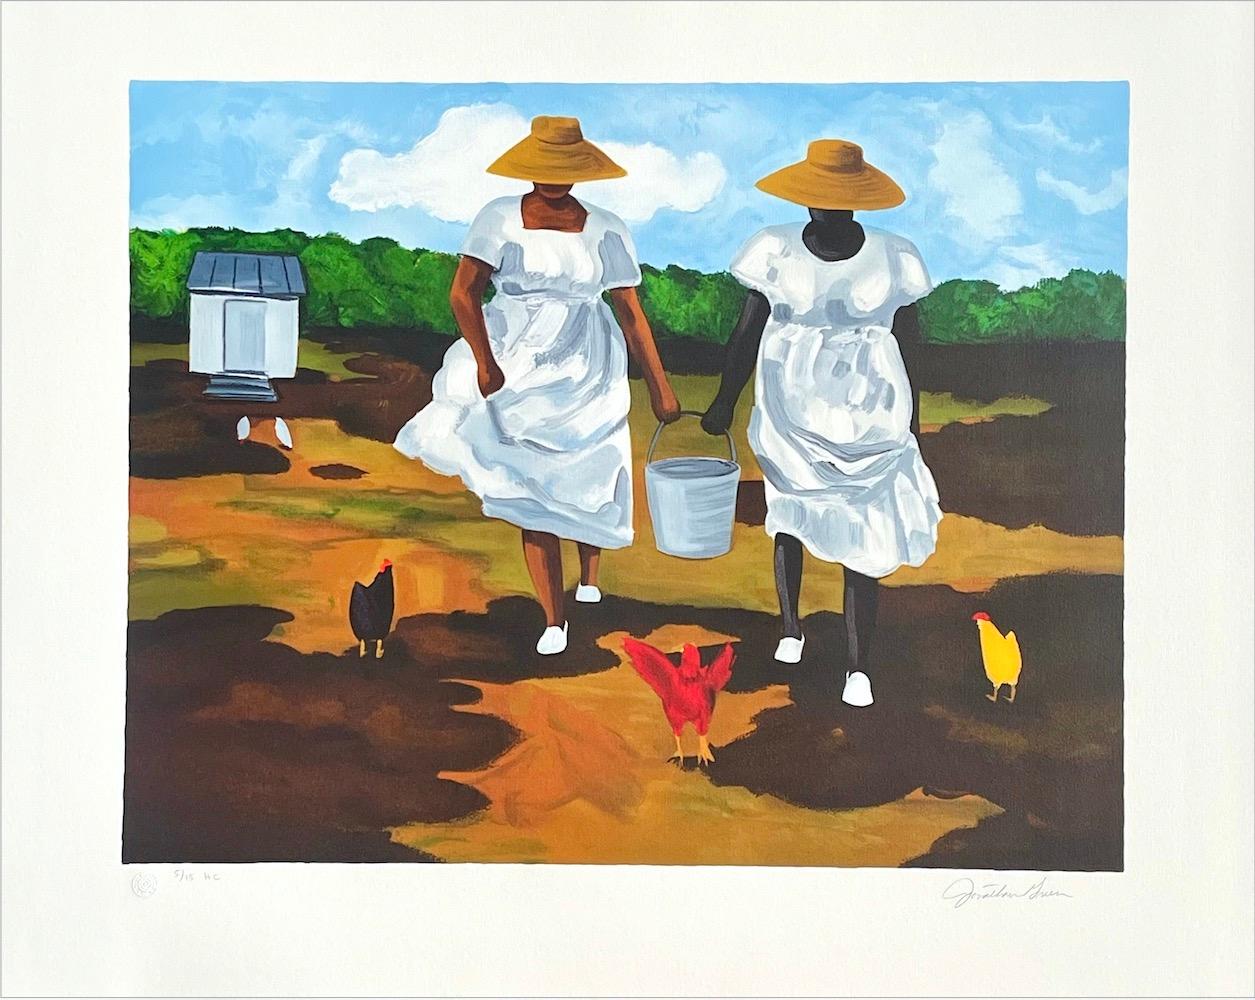 Animal Print Jonathan Green - Lithographie signée SHARING THE CHORES, deux femmes nourrissant des poules, culture Gullah